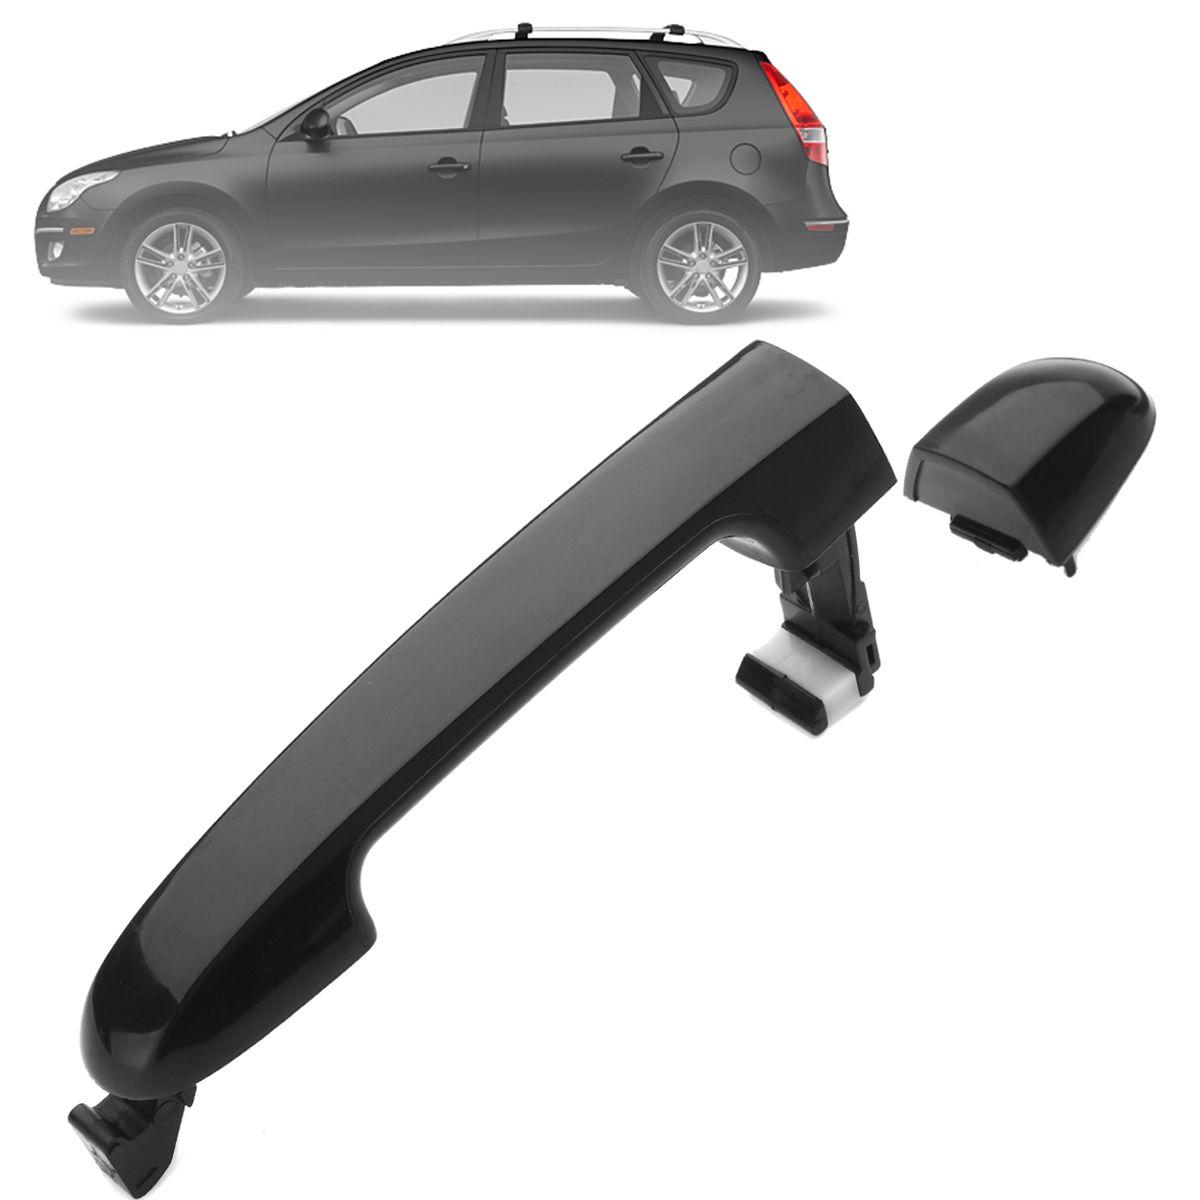 Pair Car Rear Outer Exterior Door Handle Cover Trim for Hyundai Elantra 2007-2012